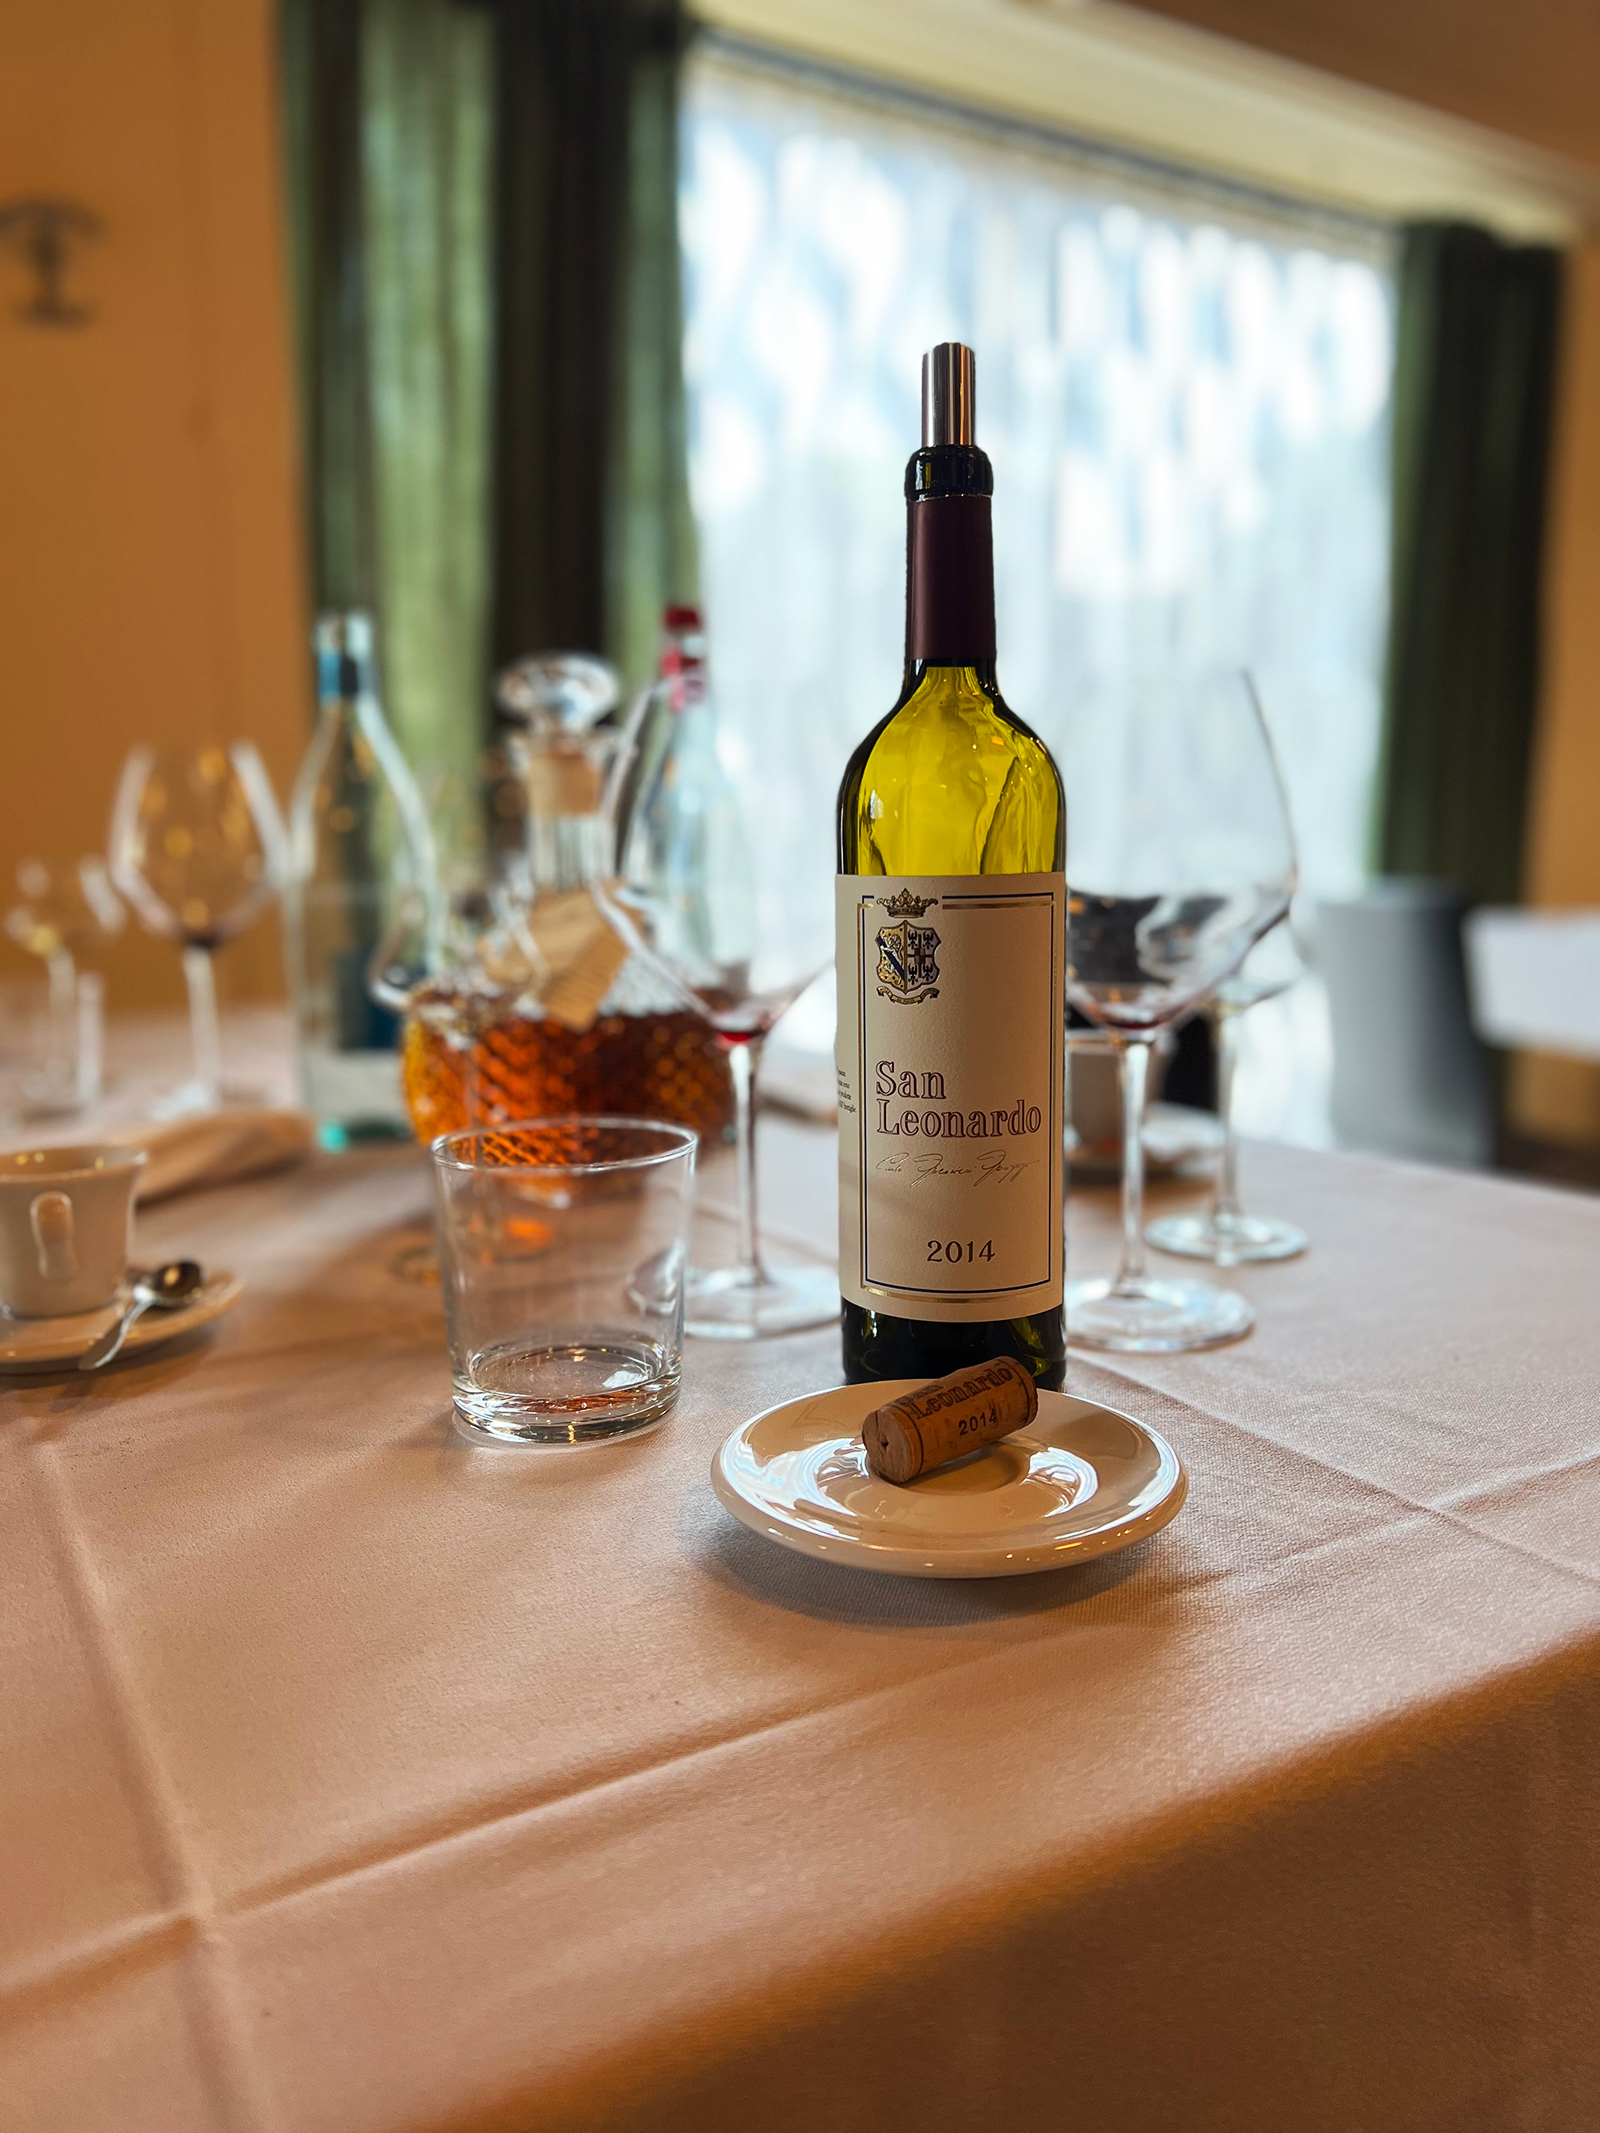 Bottilgia San Leoanrdo 2014 - Carta vini - Punto di affiliazione Vignaioli indipendenti